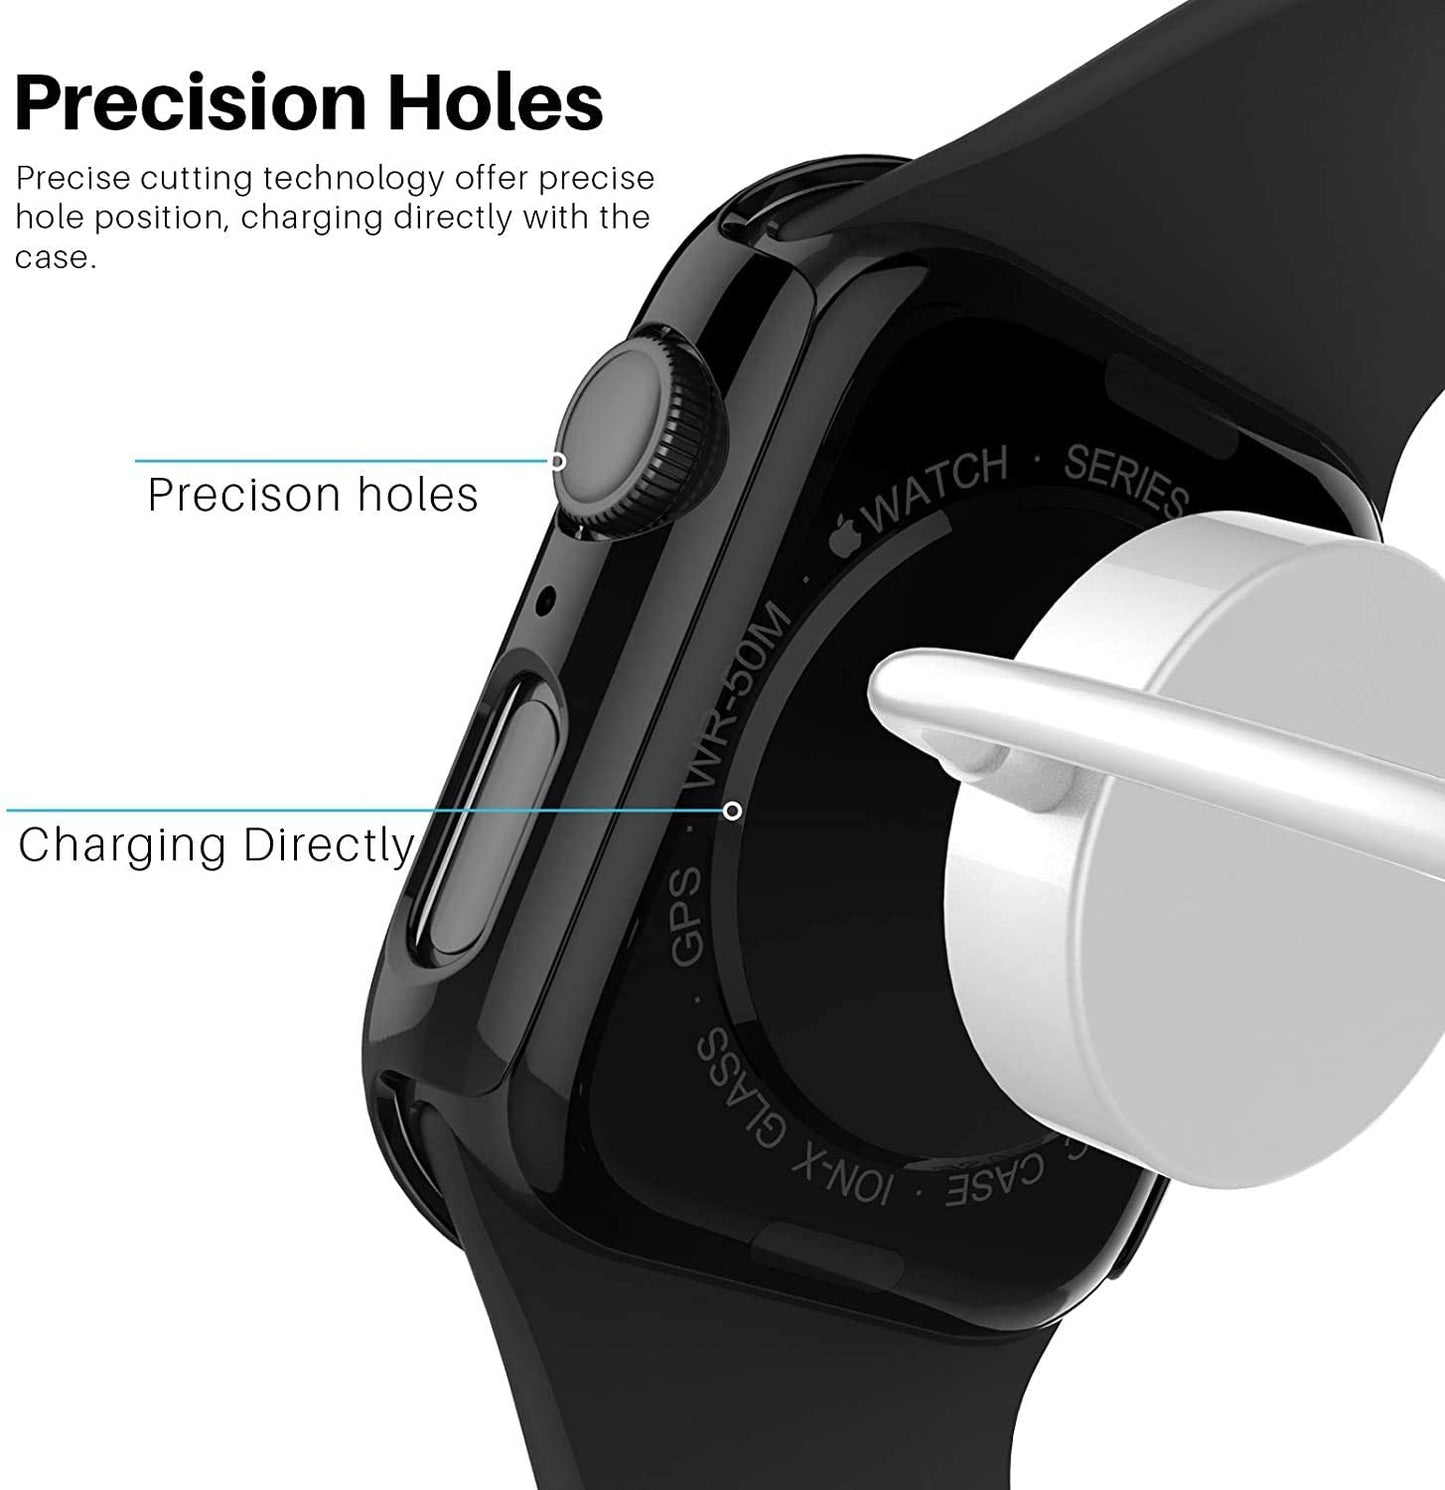 Apple Watch Glass Screen